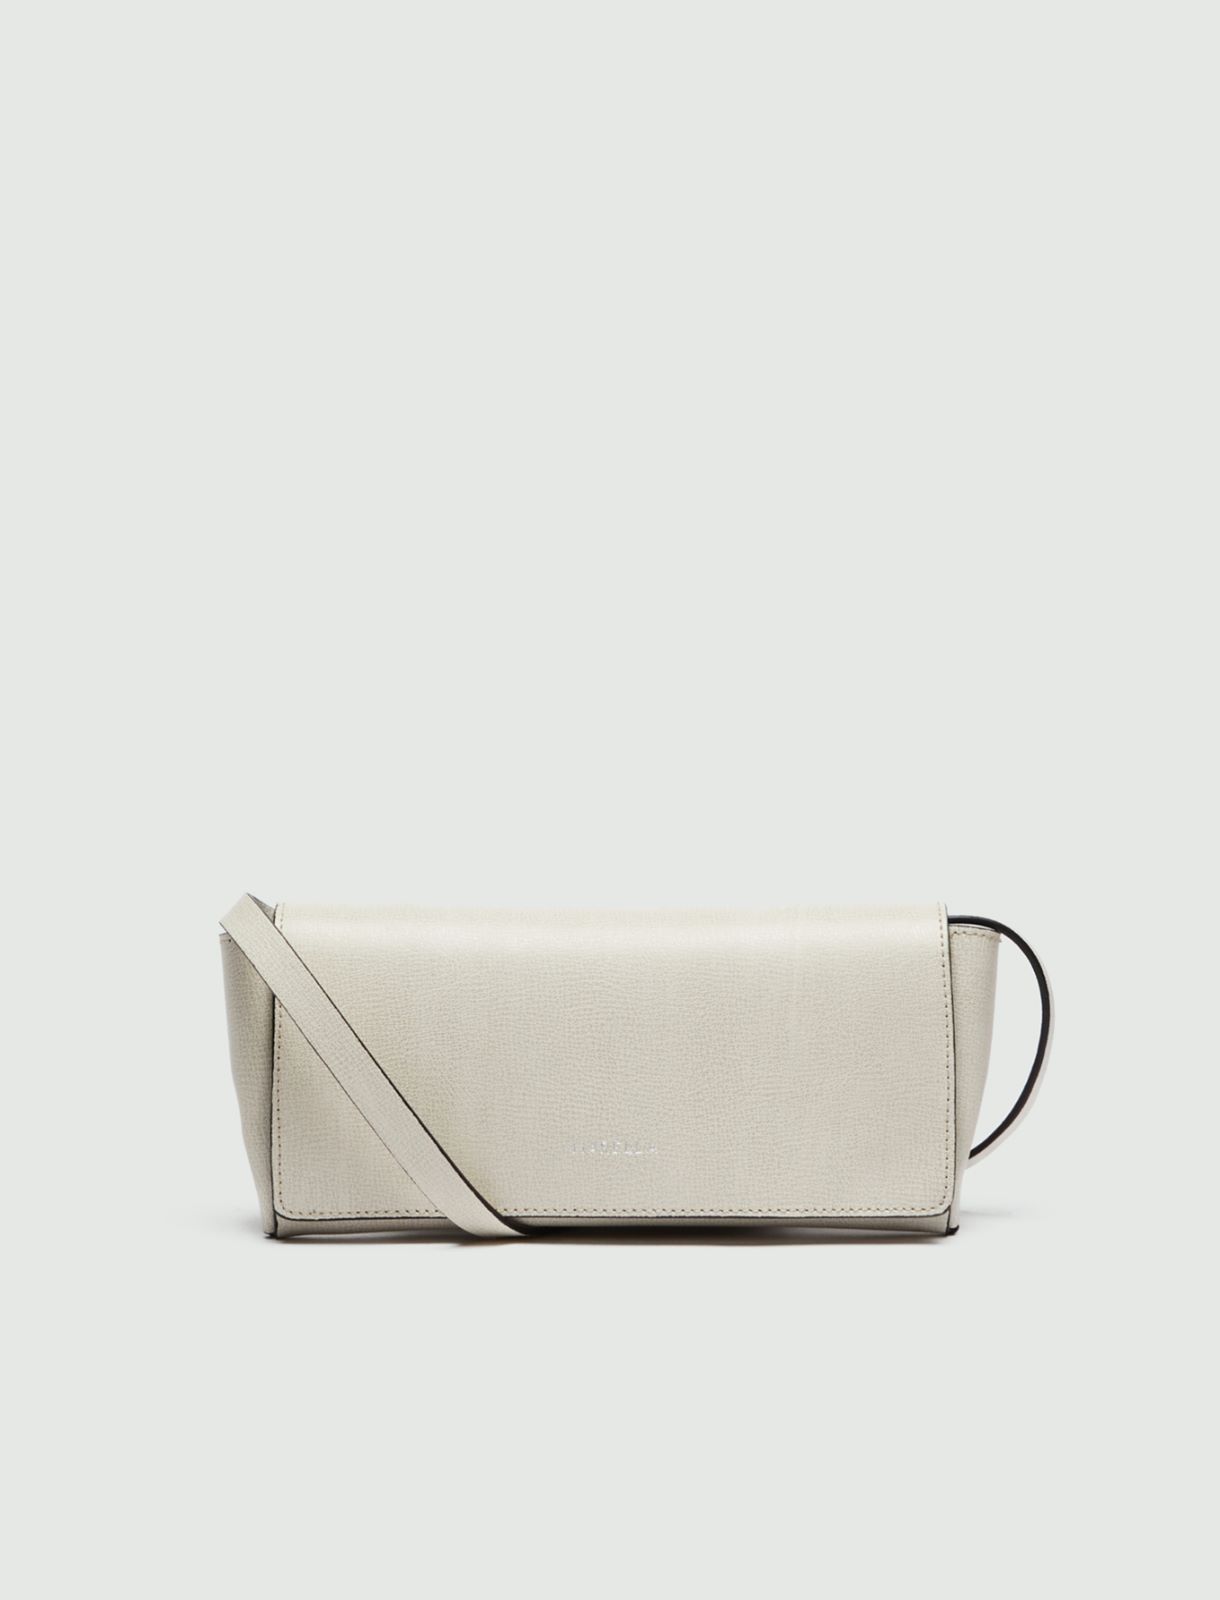 Leather wallet/bag  - White - Marella - 2